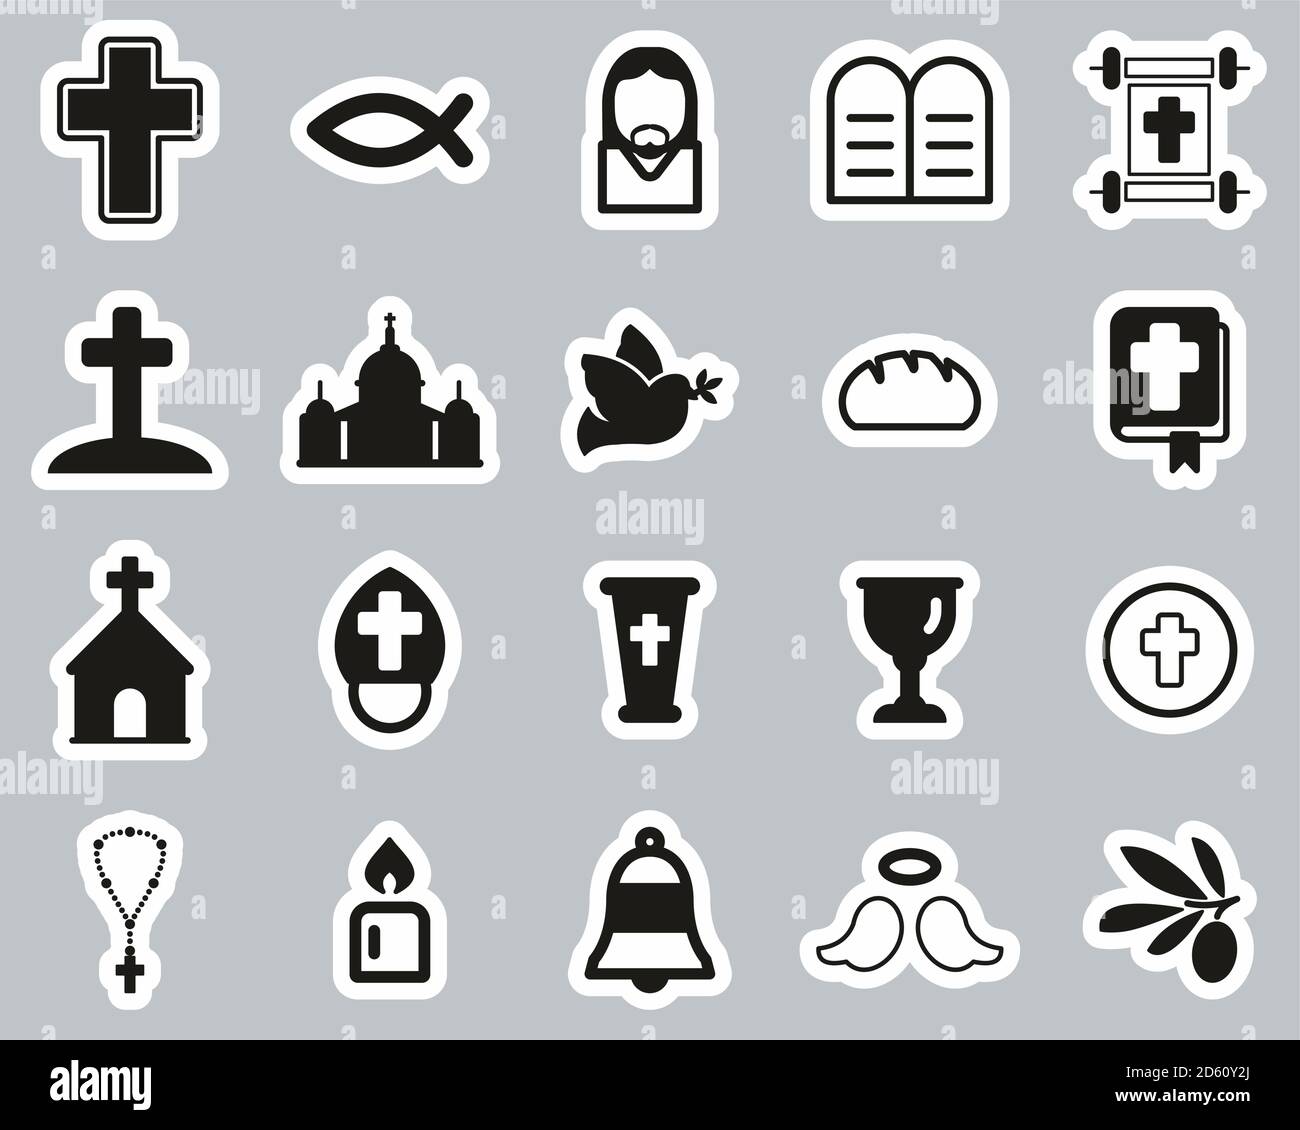 Christianity Religion & Religious Items Icons Black & White Sticker Set Big Stock Vector